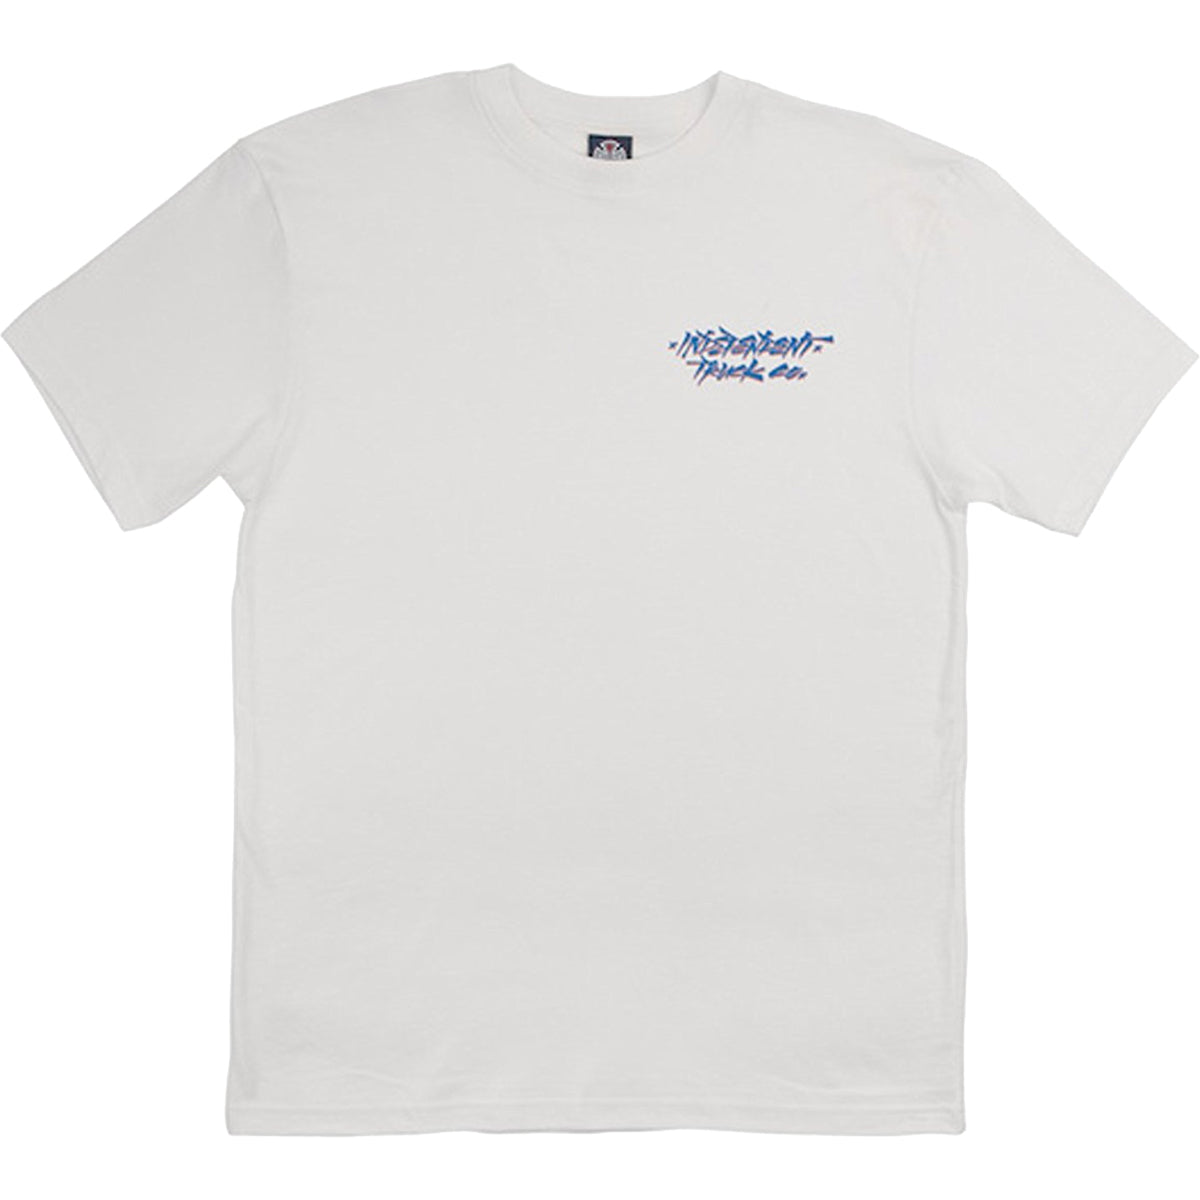 Independent Brush Stroke Men's Short-Sleeve Shirts - White